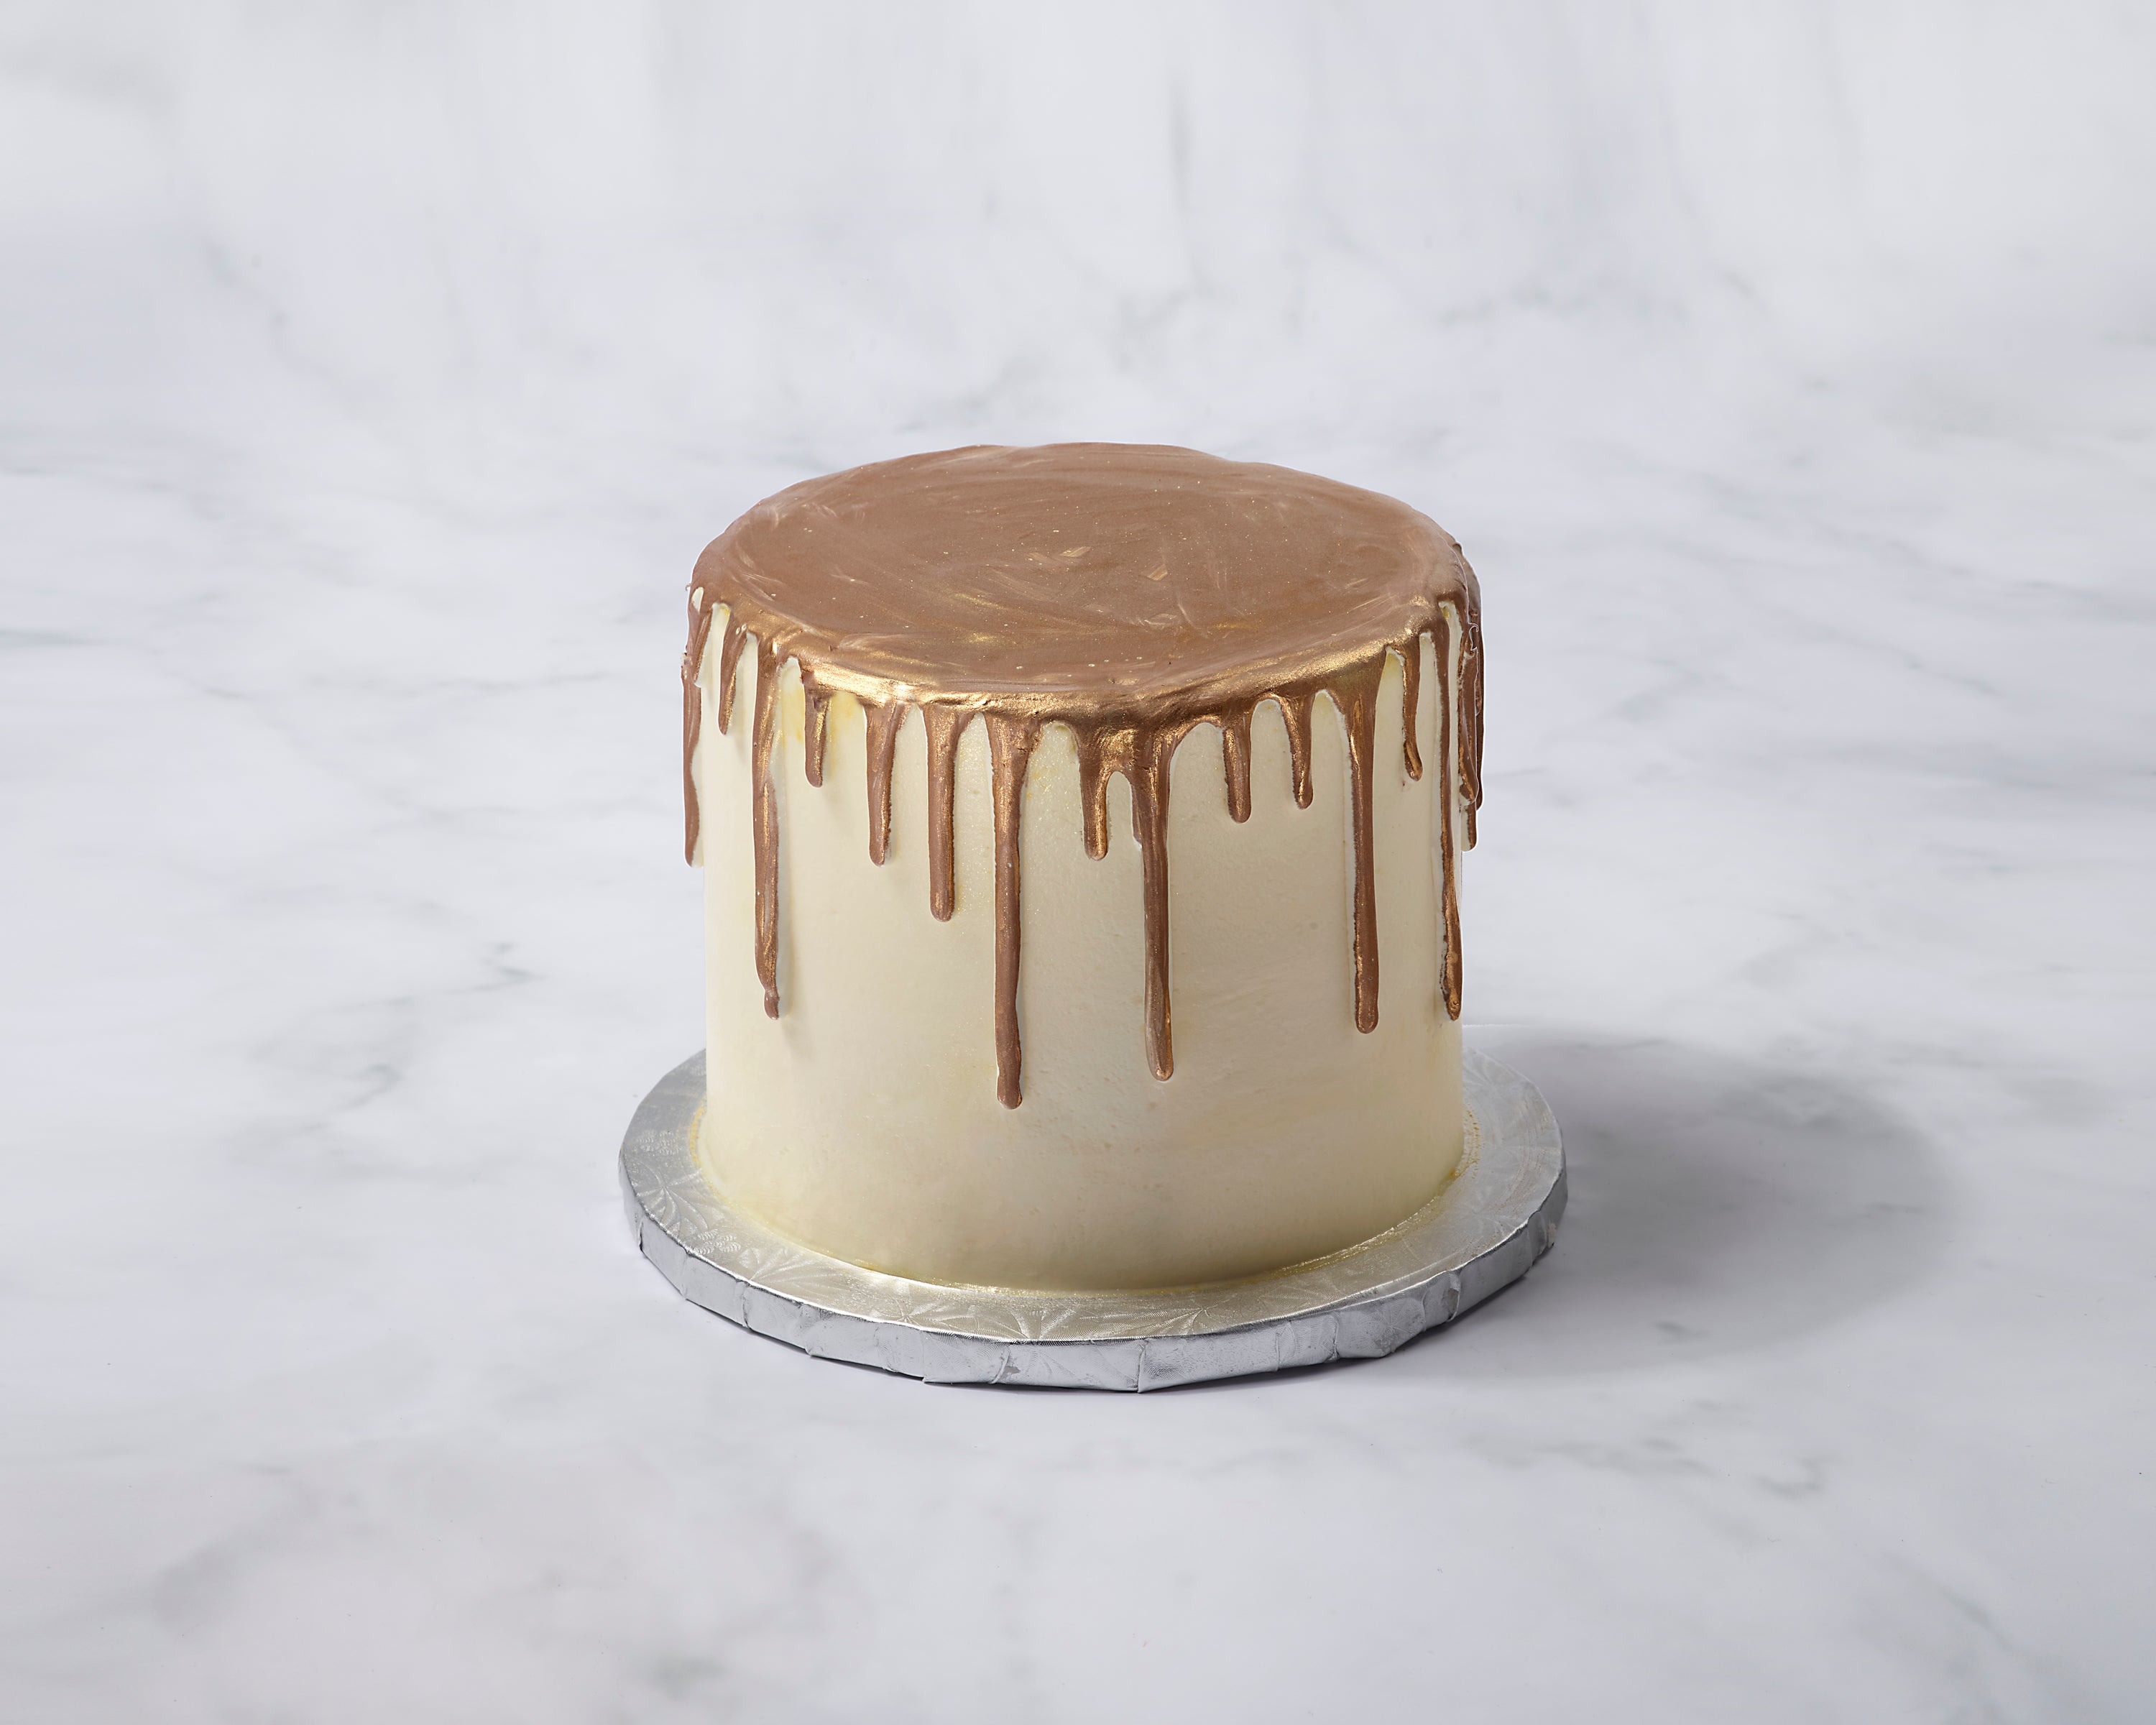 100+ Chocolate Cake Ideas | Truffle Cake, Creative Designs